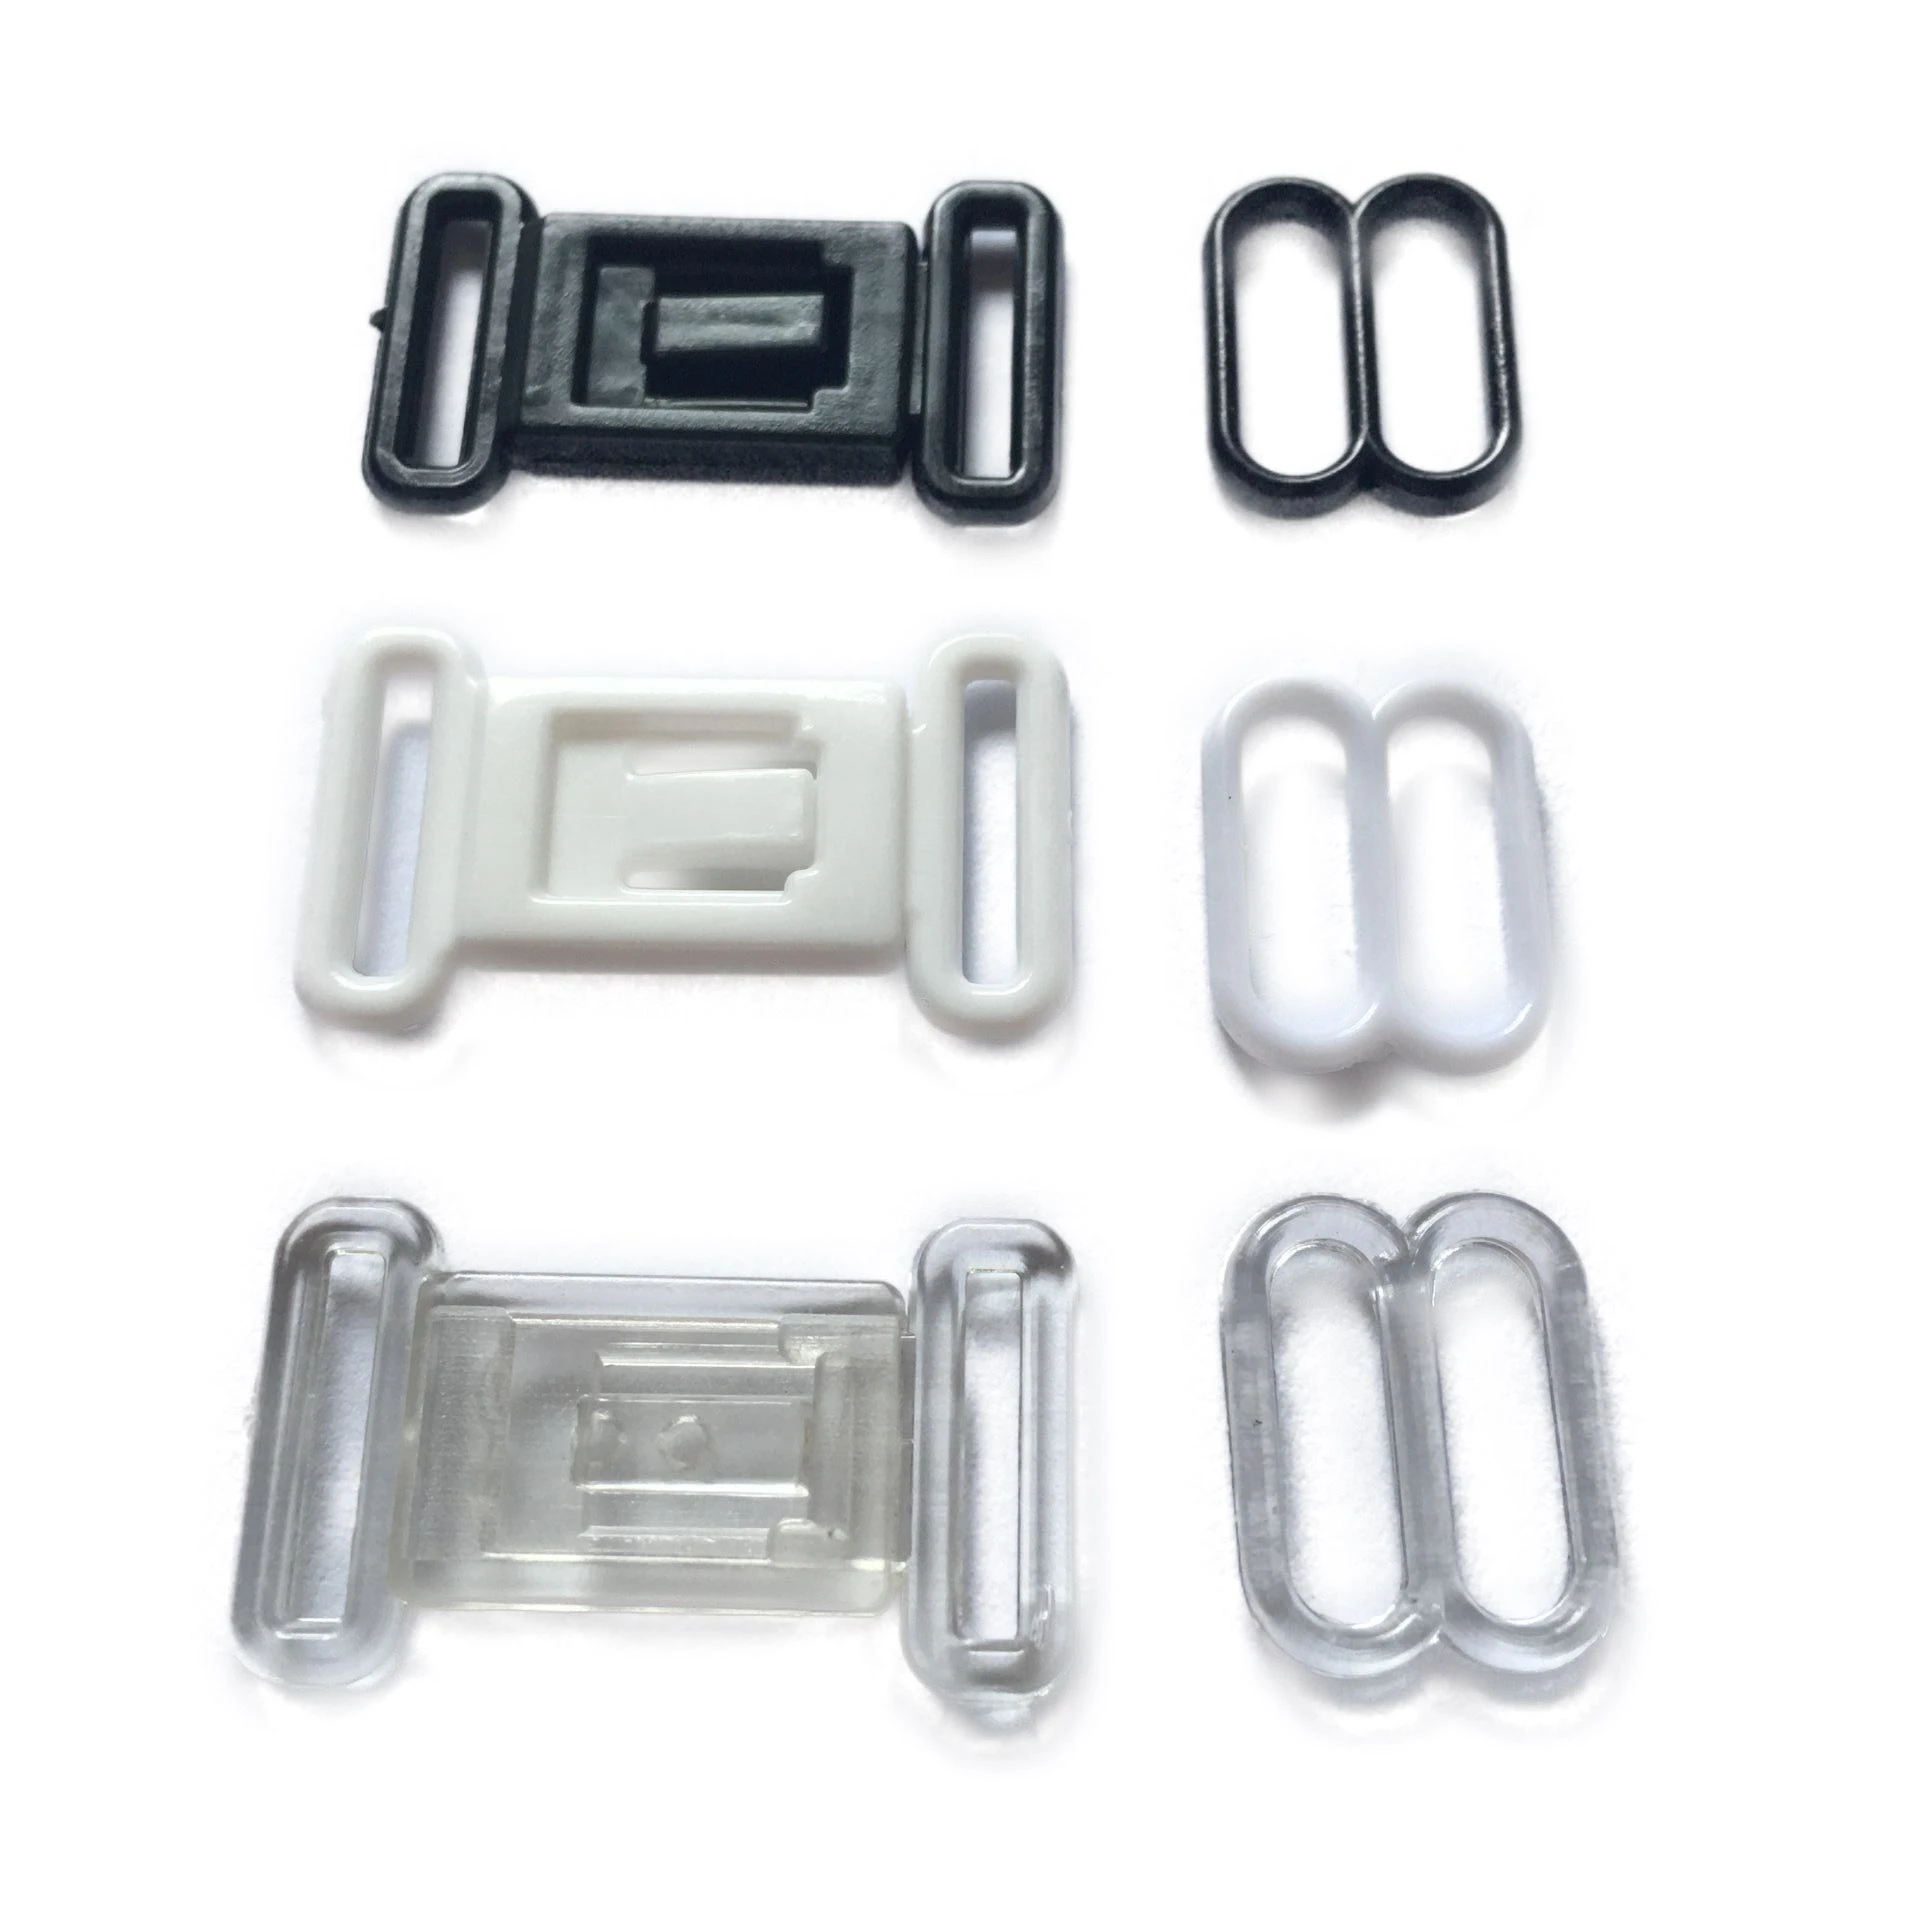 50 sets plastic Hardware Sets adjustable tape accessories black clasps & hooks eye set bow tie clip buckles